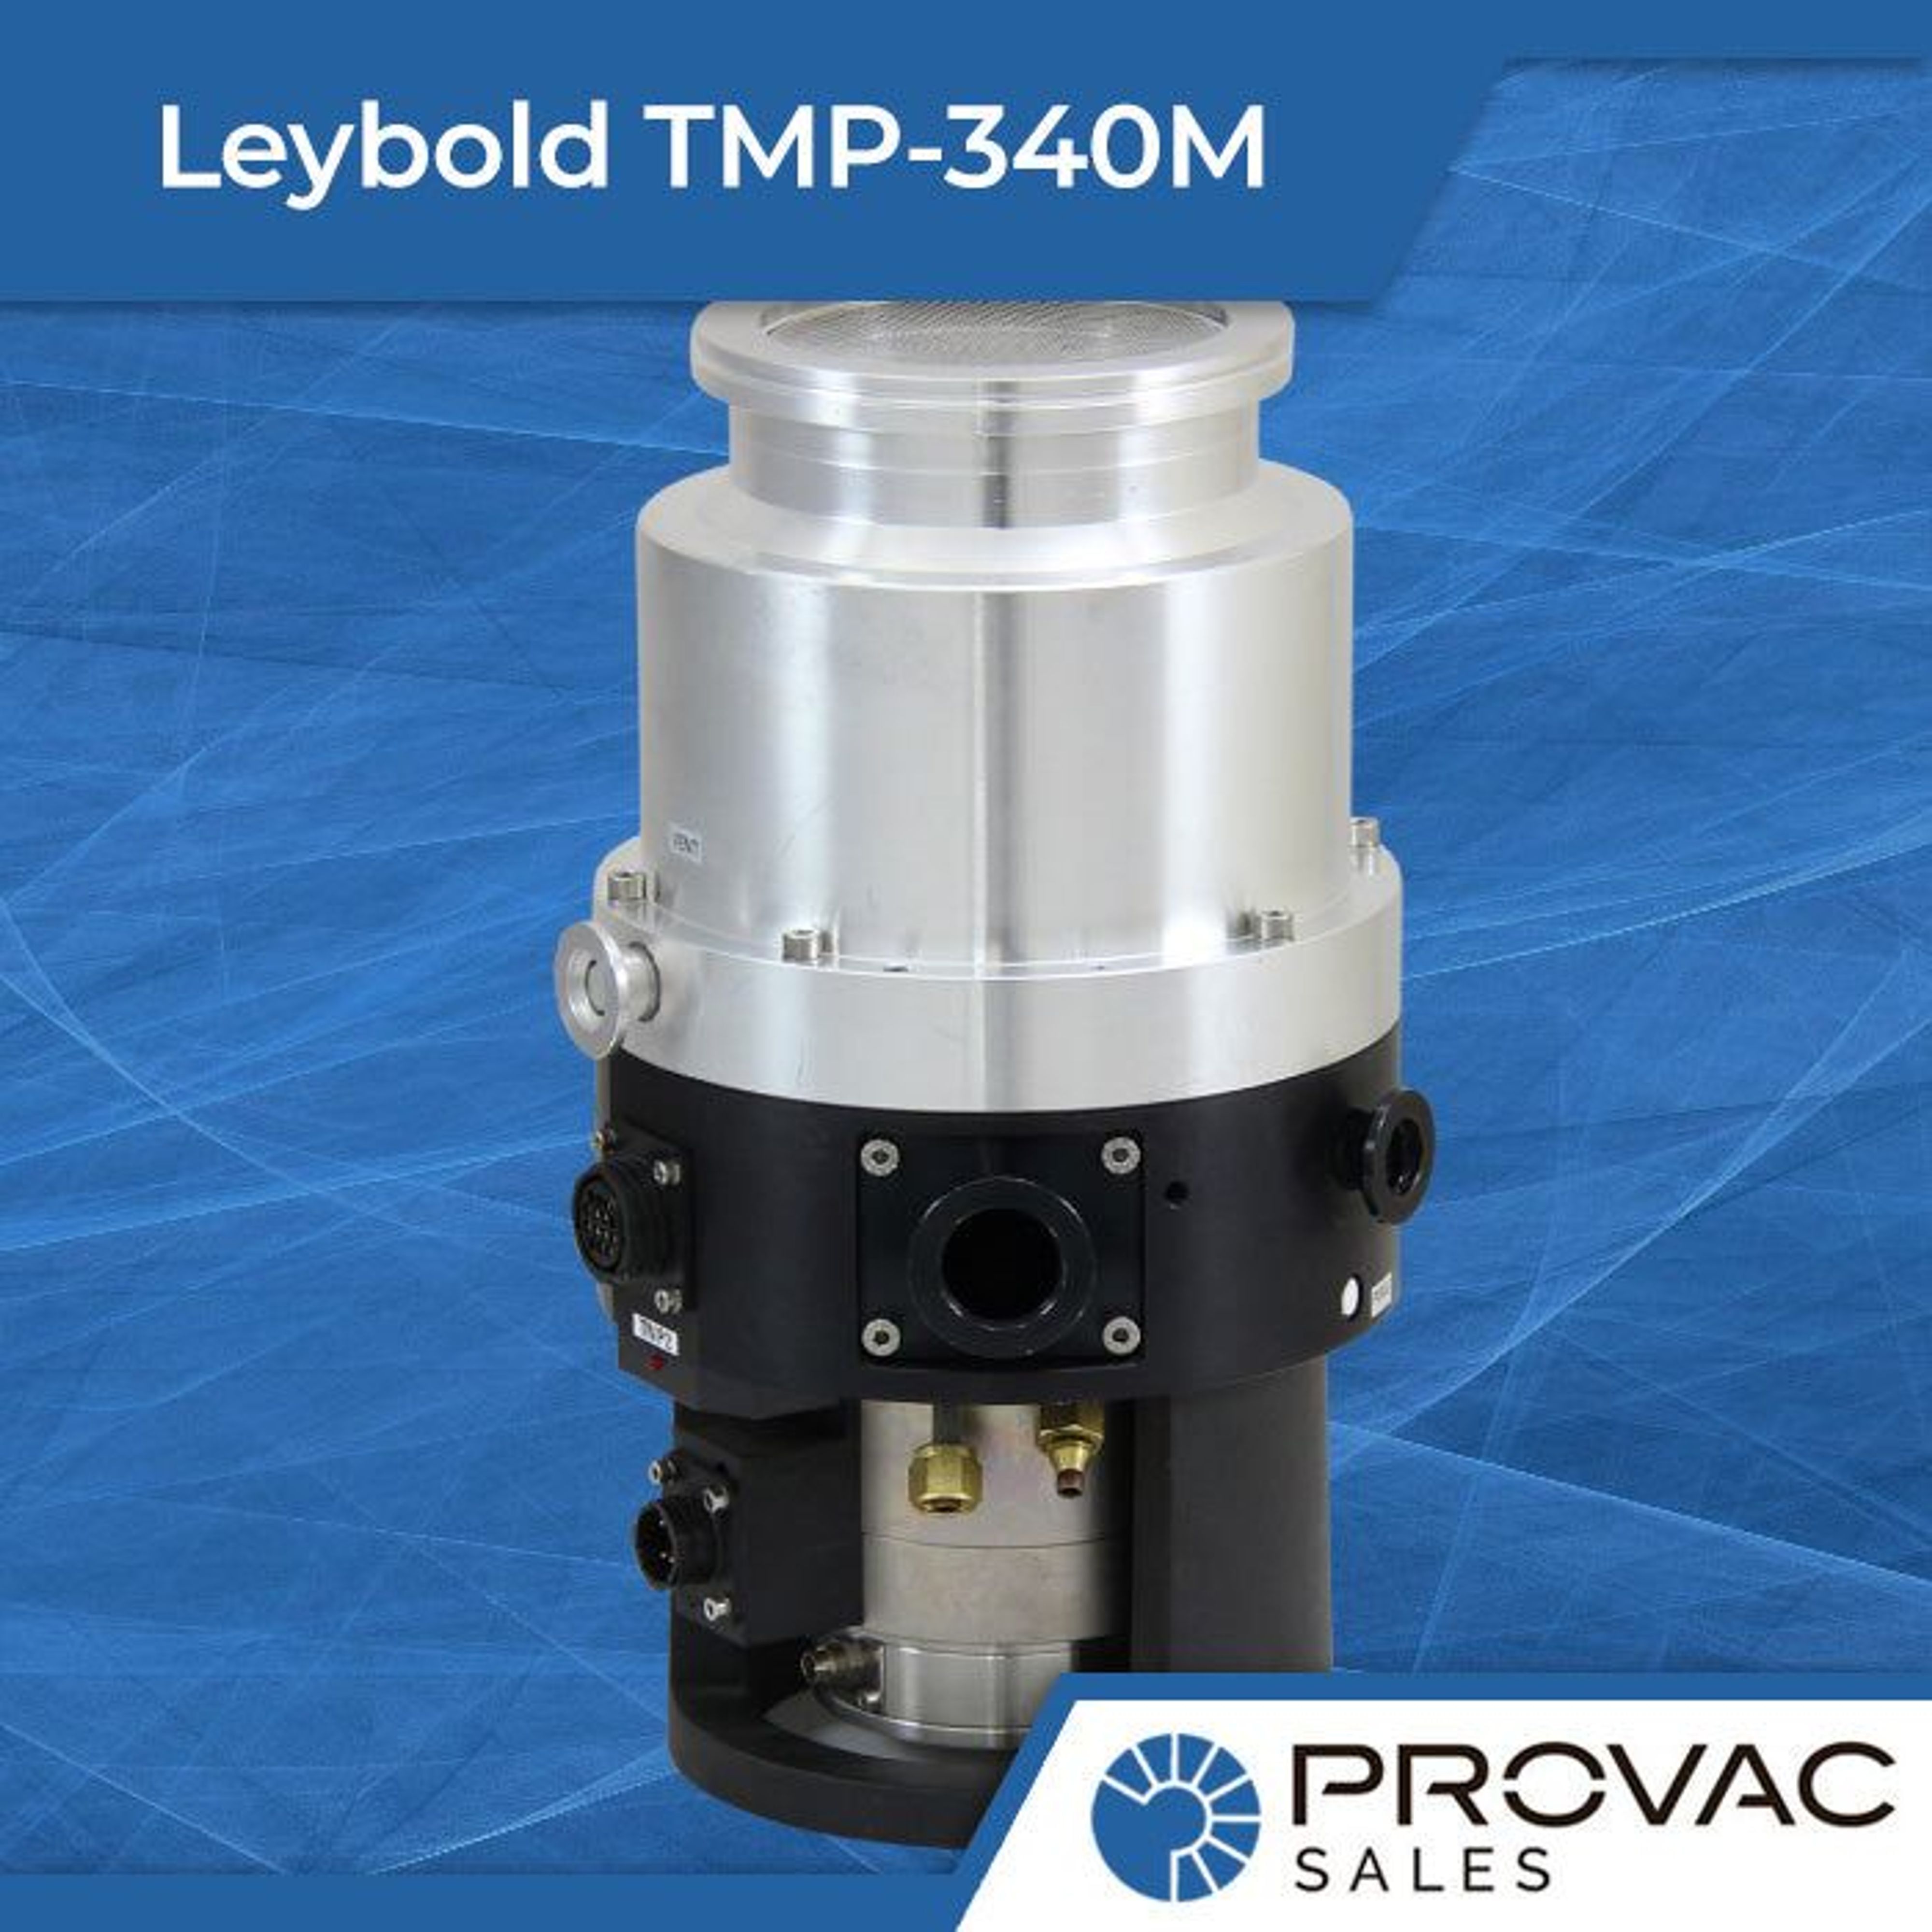 Leybold TMP-340M Turbomolecular Pump Background